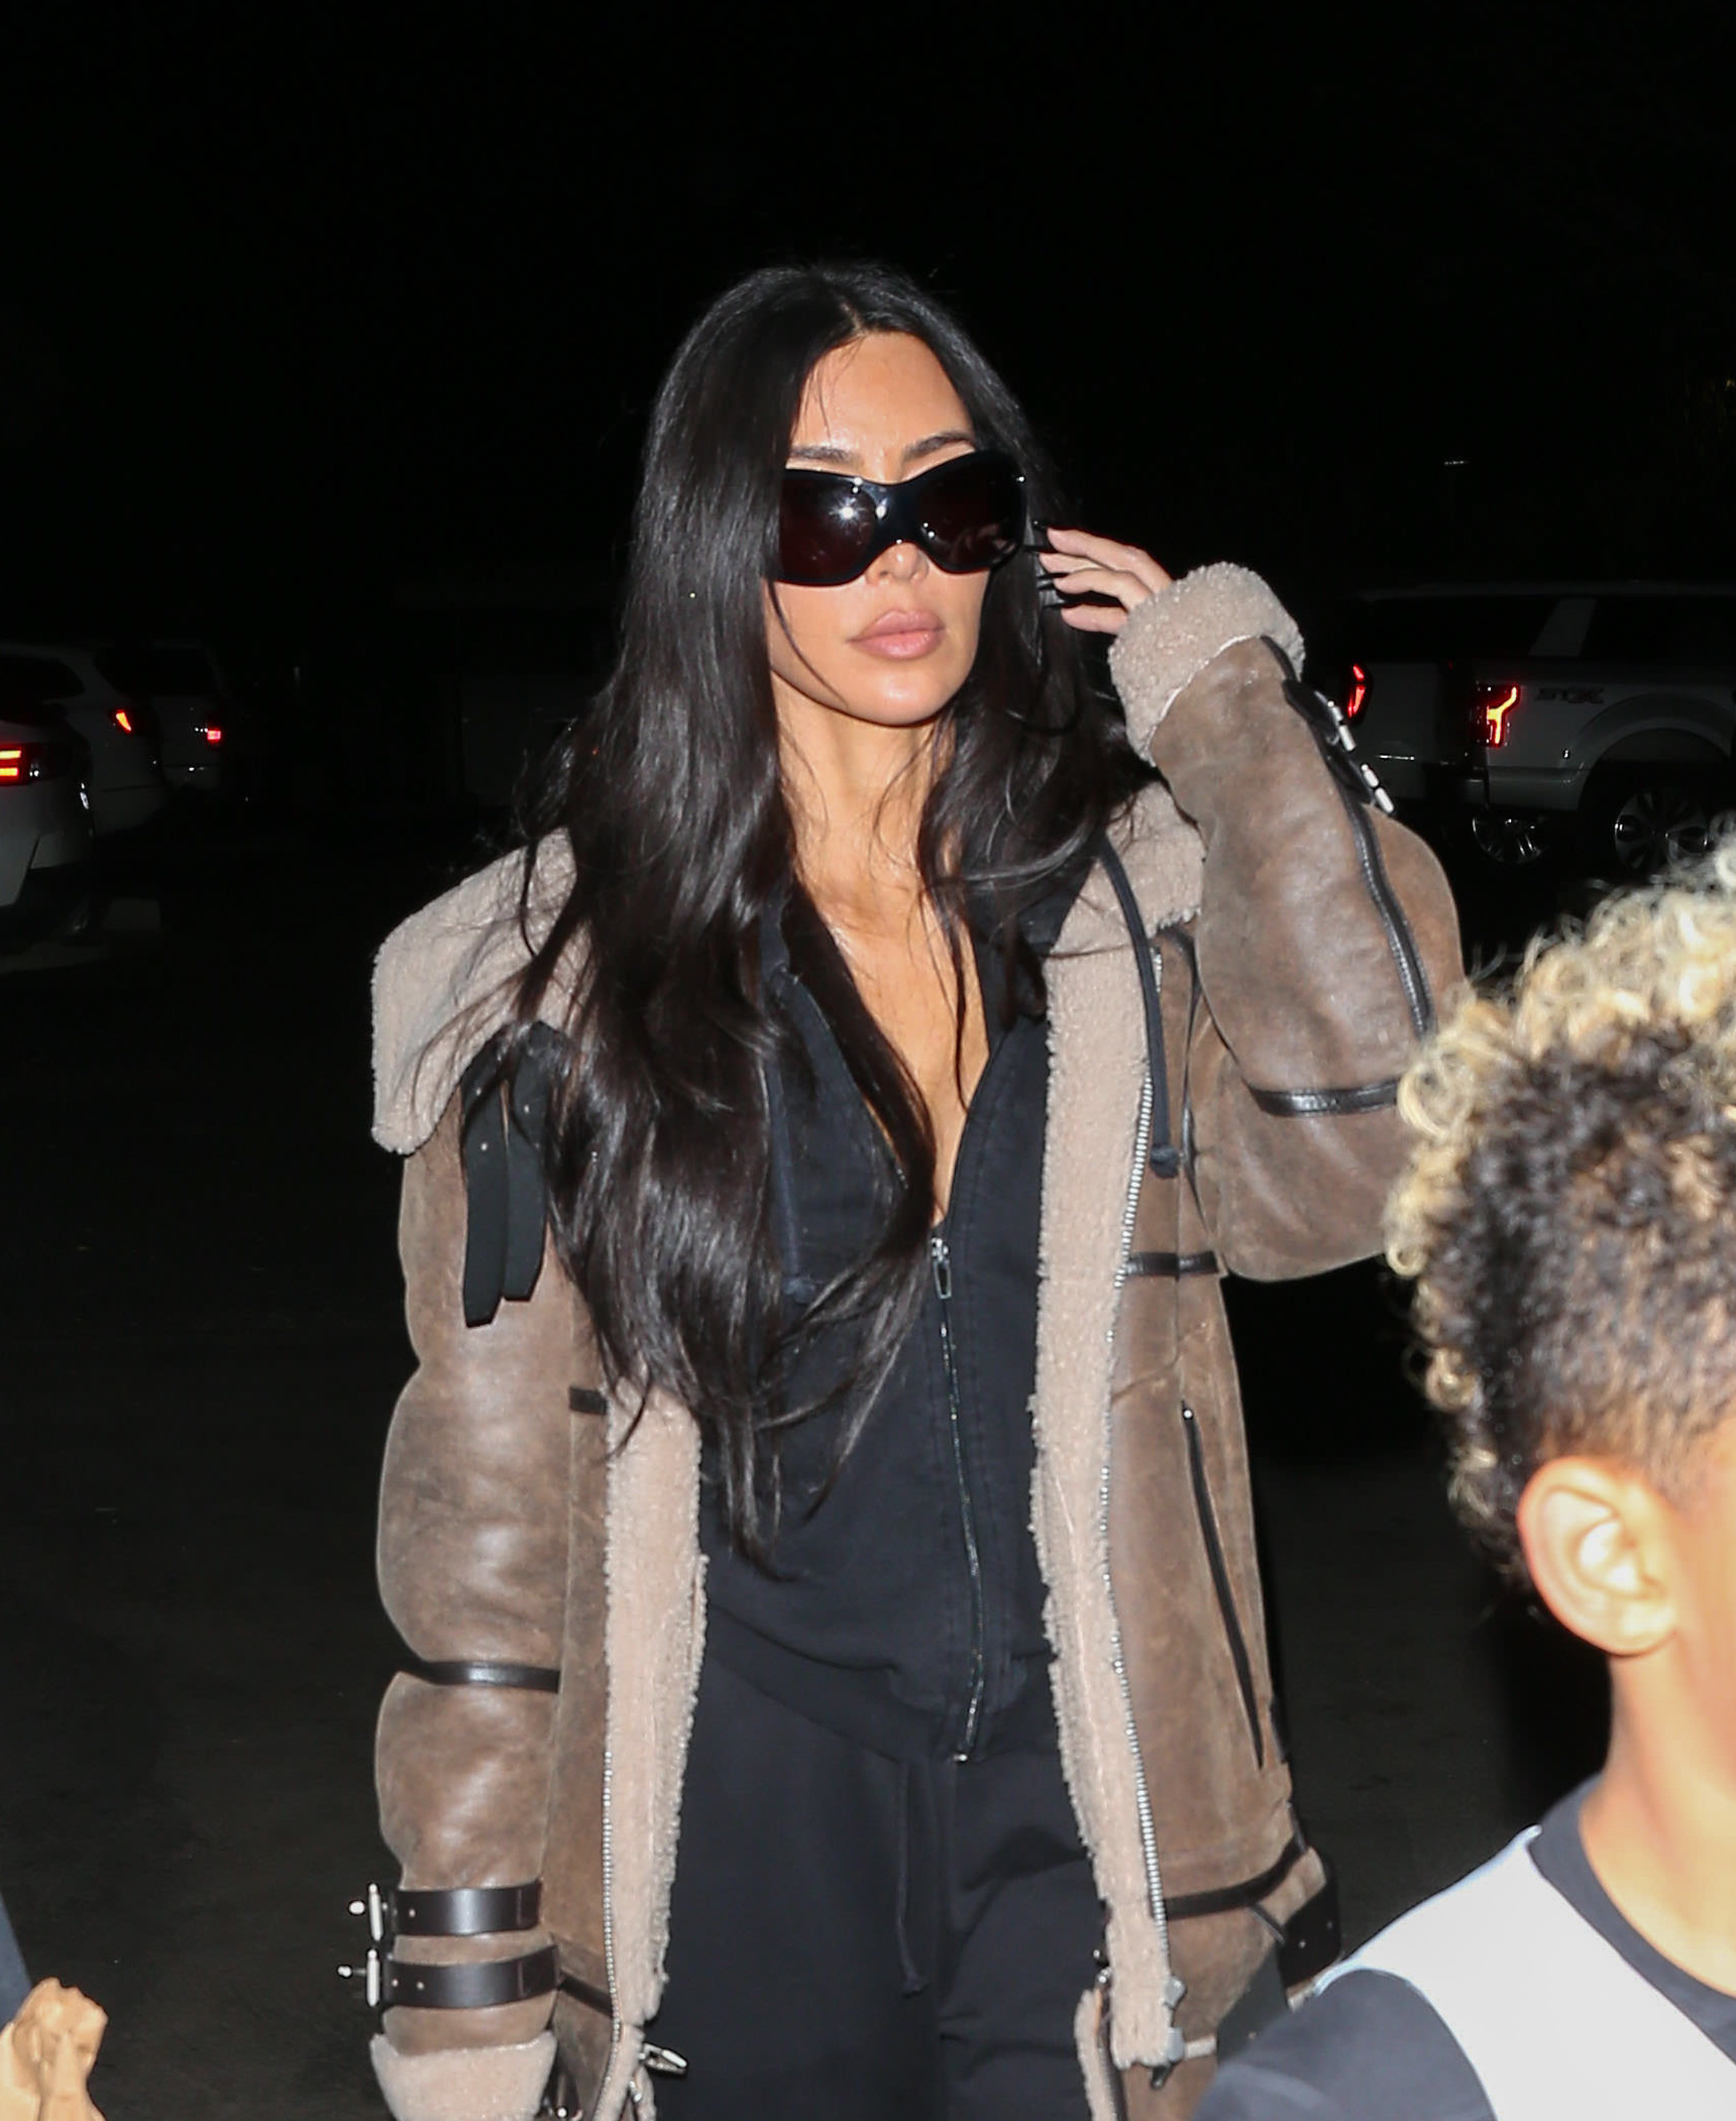 Closeup of Kim Kardashian walking outside at night with sunglasses on